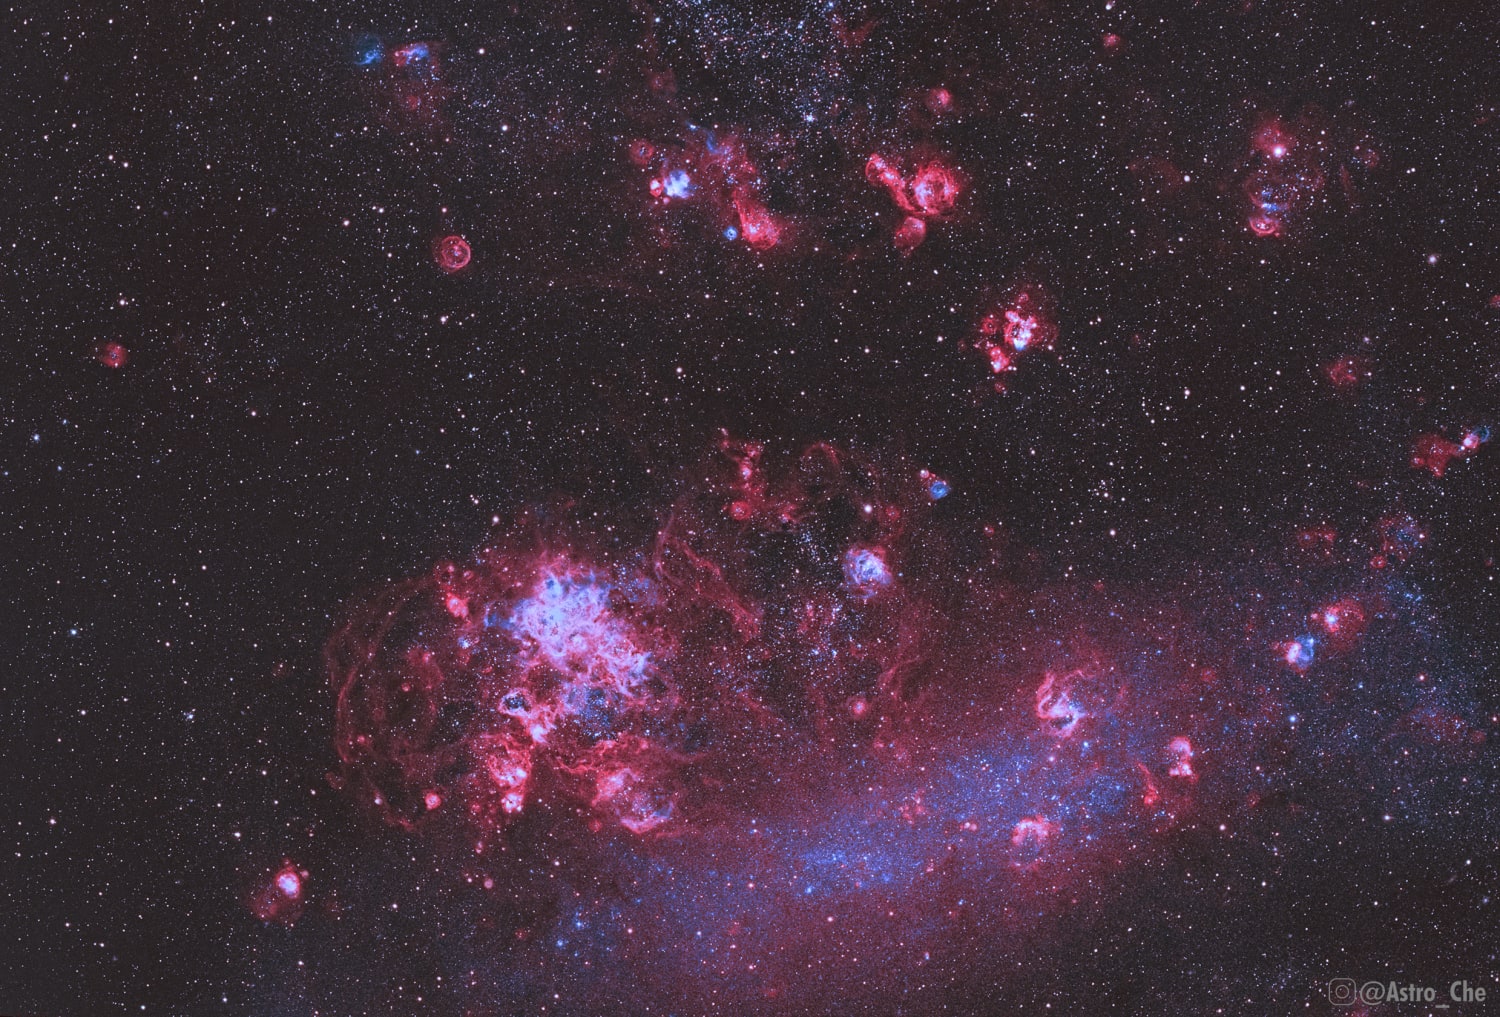 I photographed the Tarantula nebula with 4.5 hours of exposure spread across many cloudy nights!